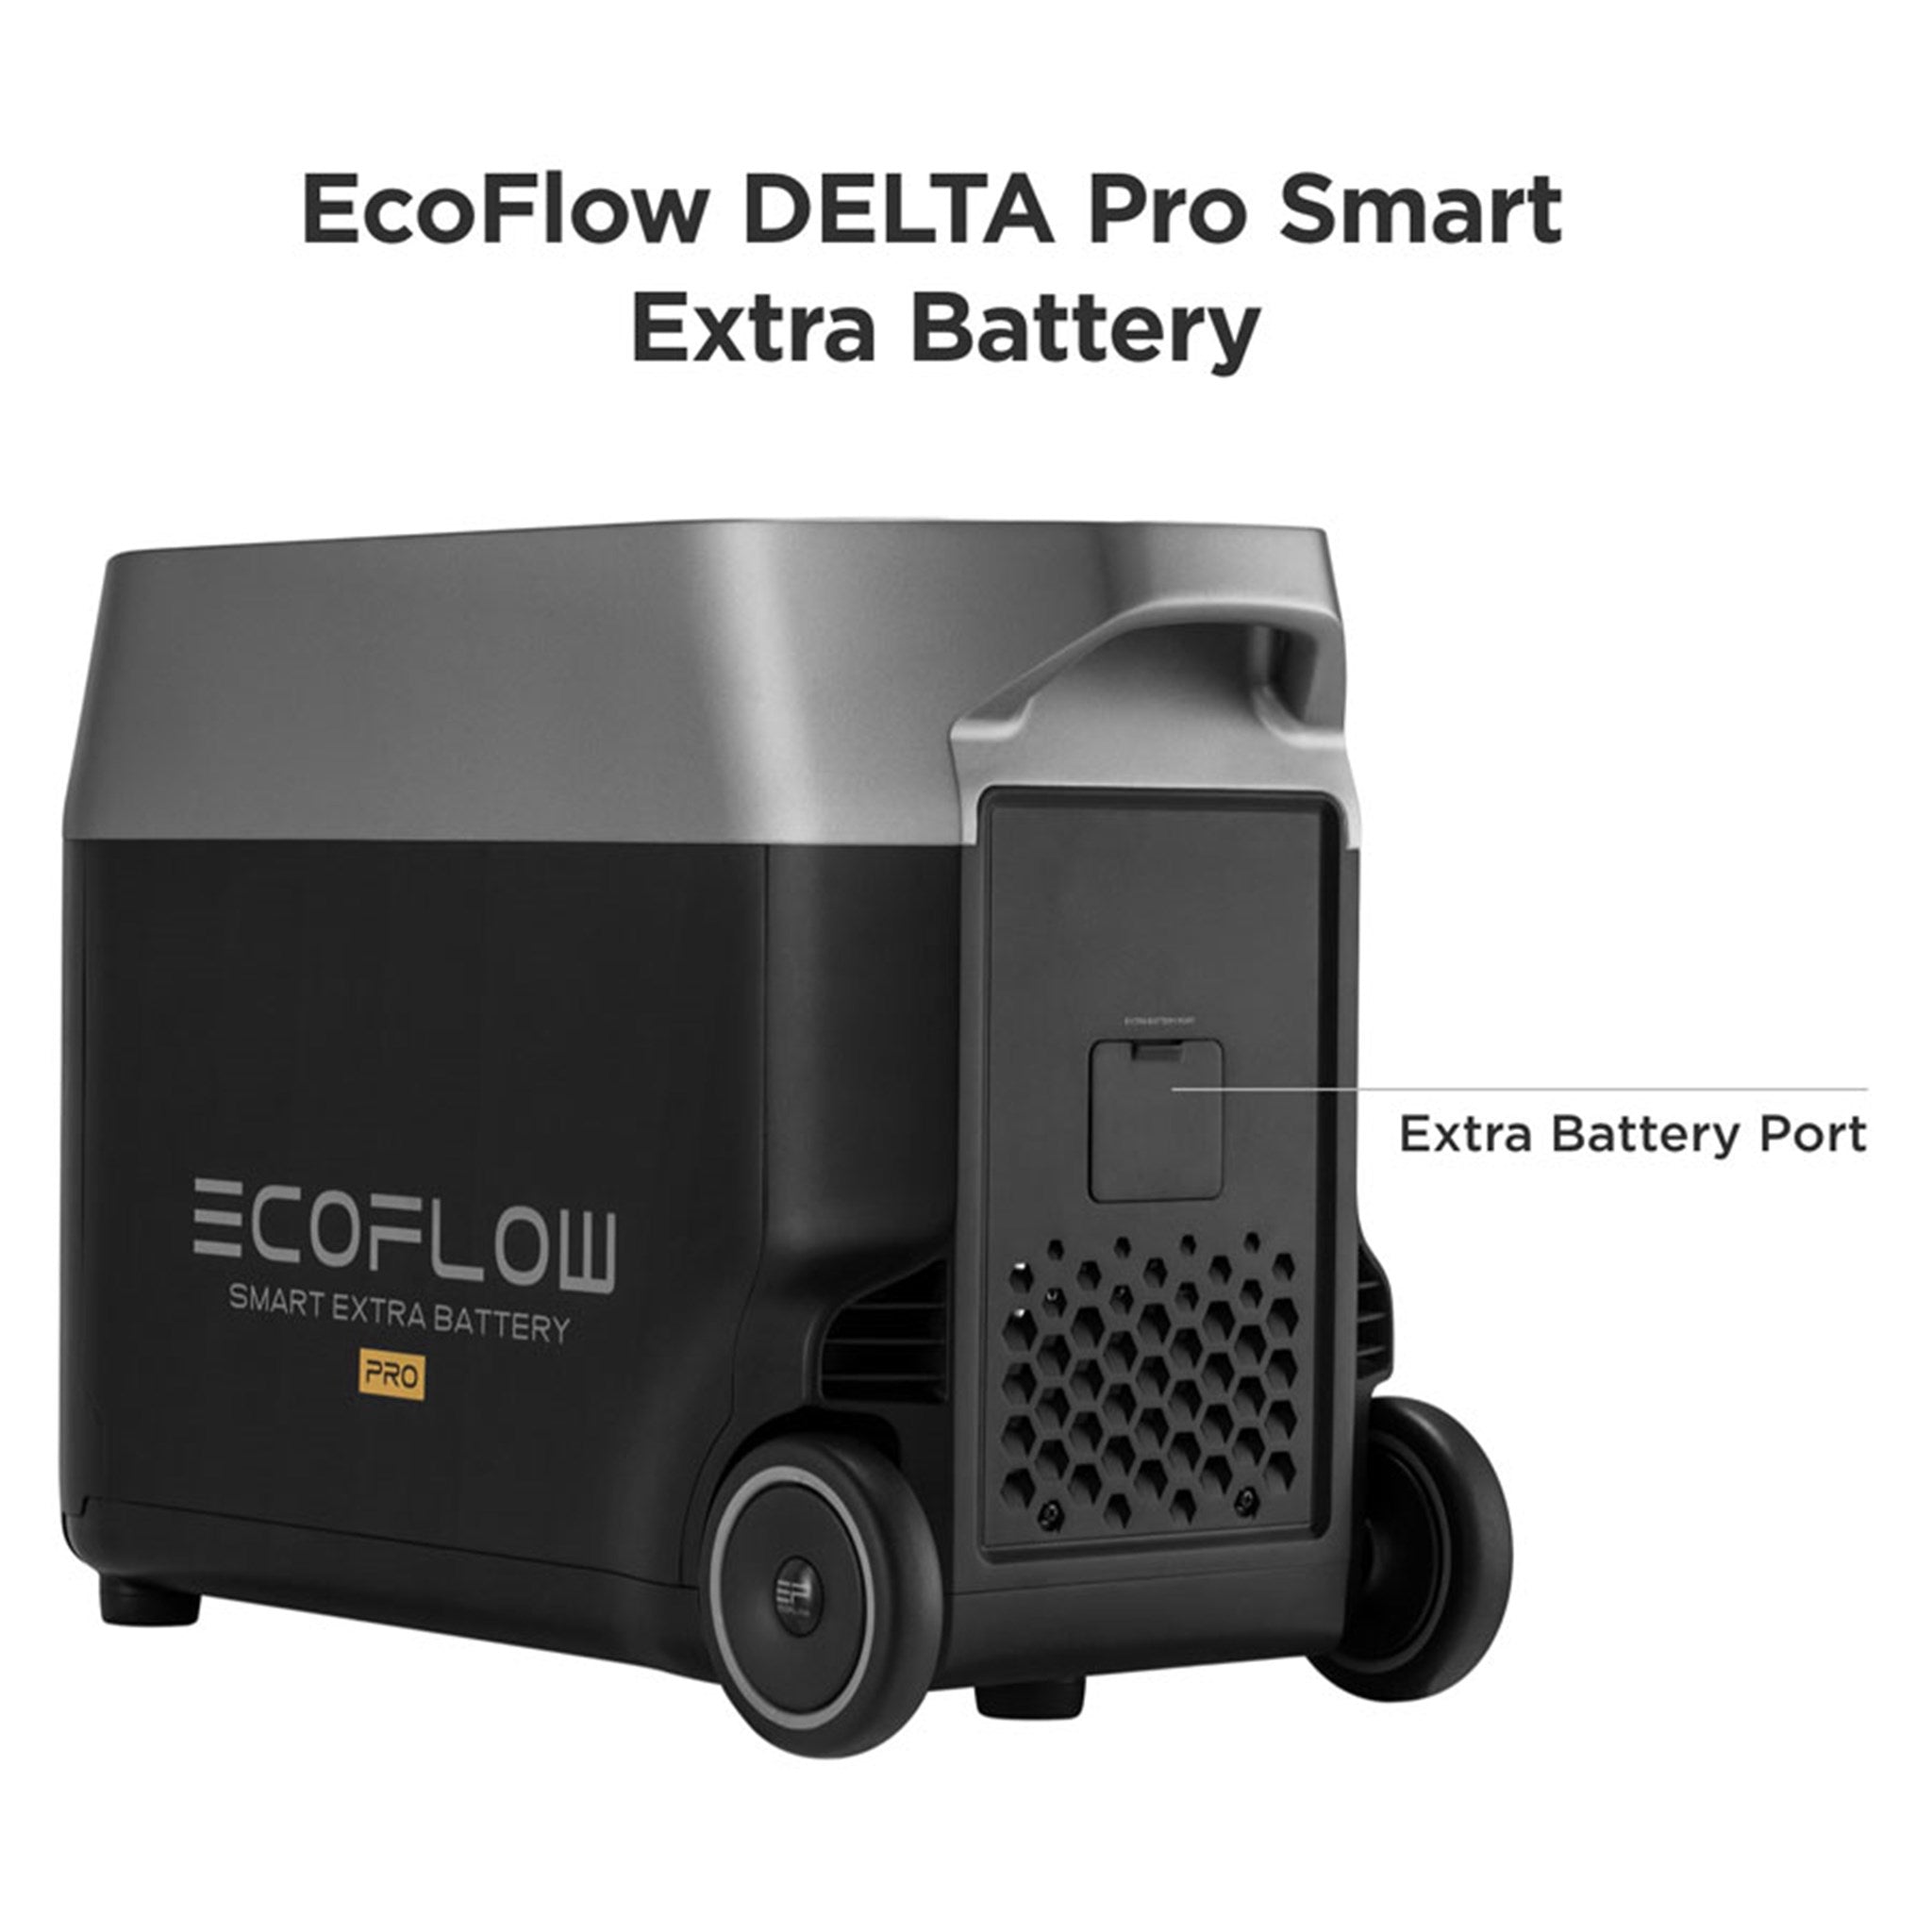 DELTAProEB-US_EcoFlow_DELTA_Pro_smart_ekstra_batteri_4-1.jpg